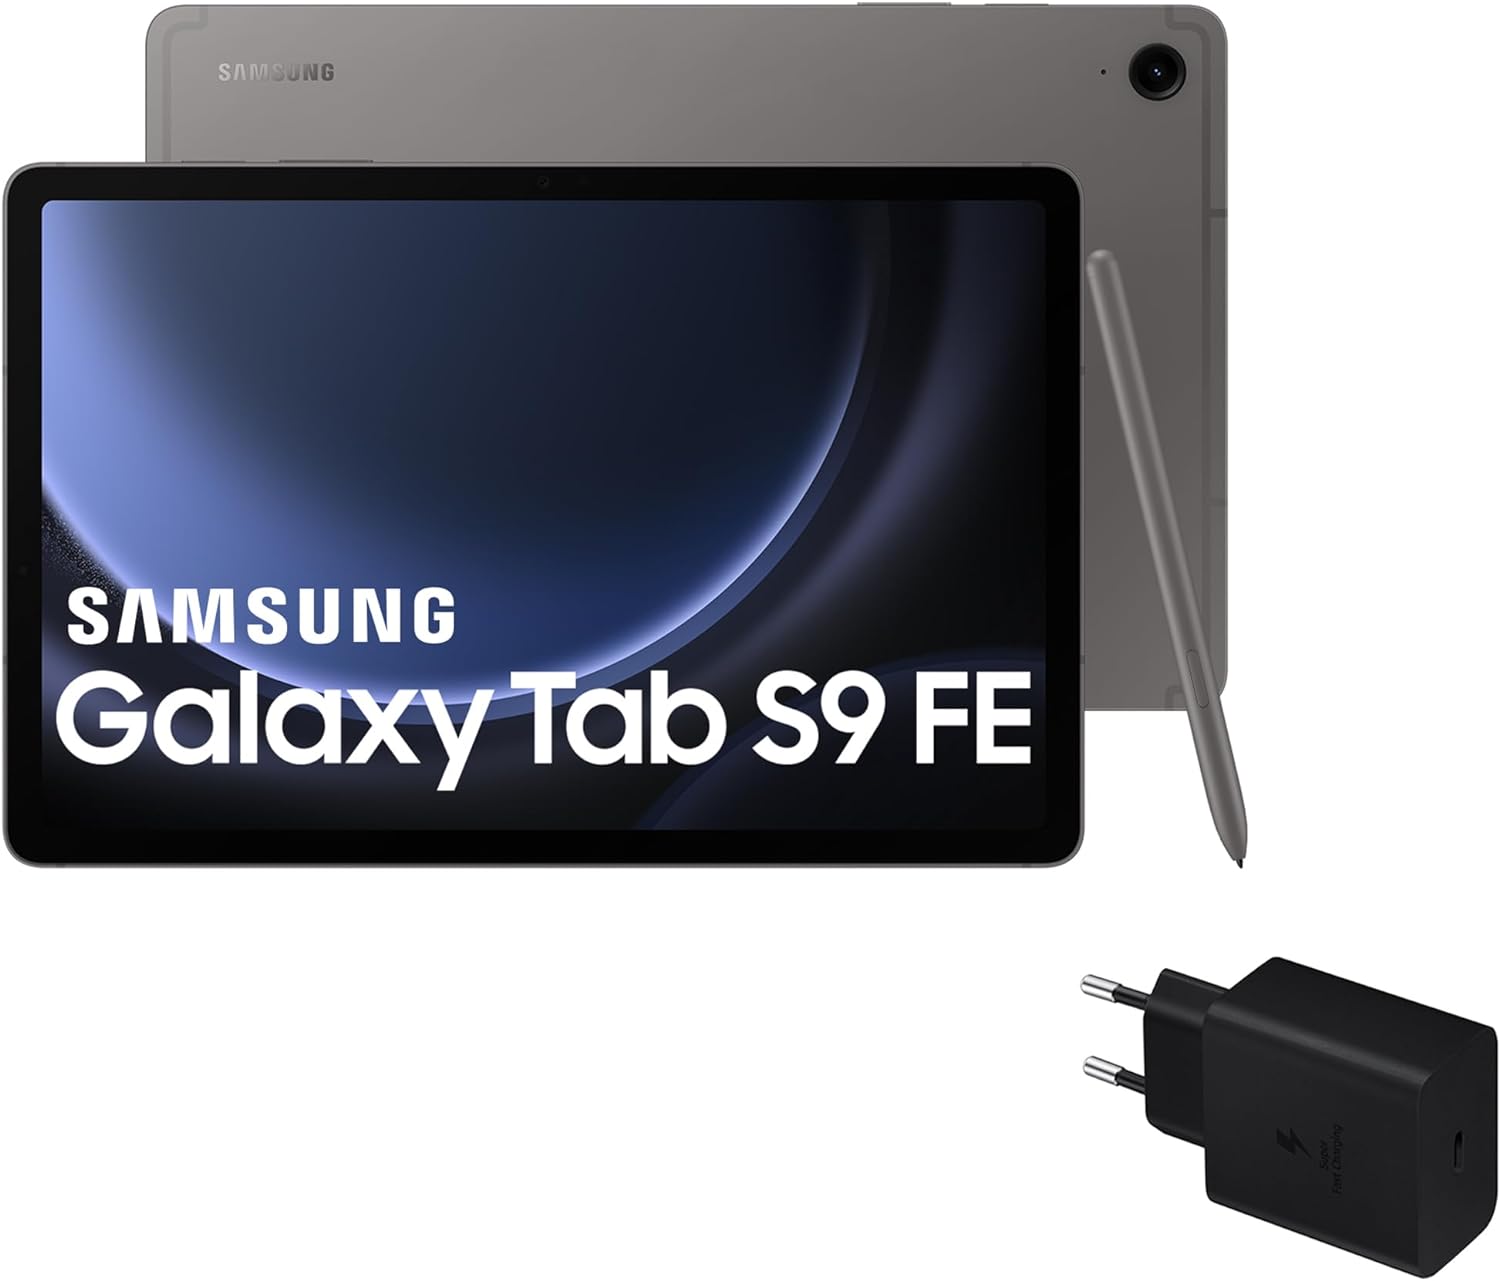 Samsung Galaxy Tab S9 FE vs Samsung Galaxy Tab S9 FE+